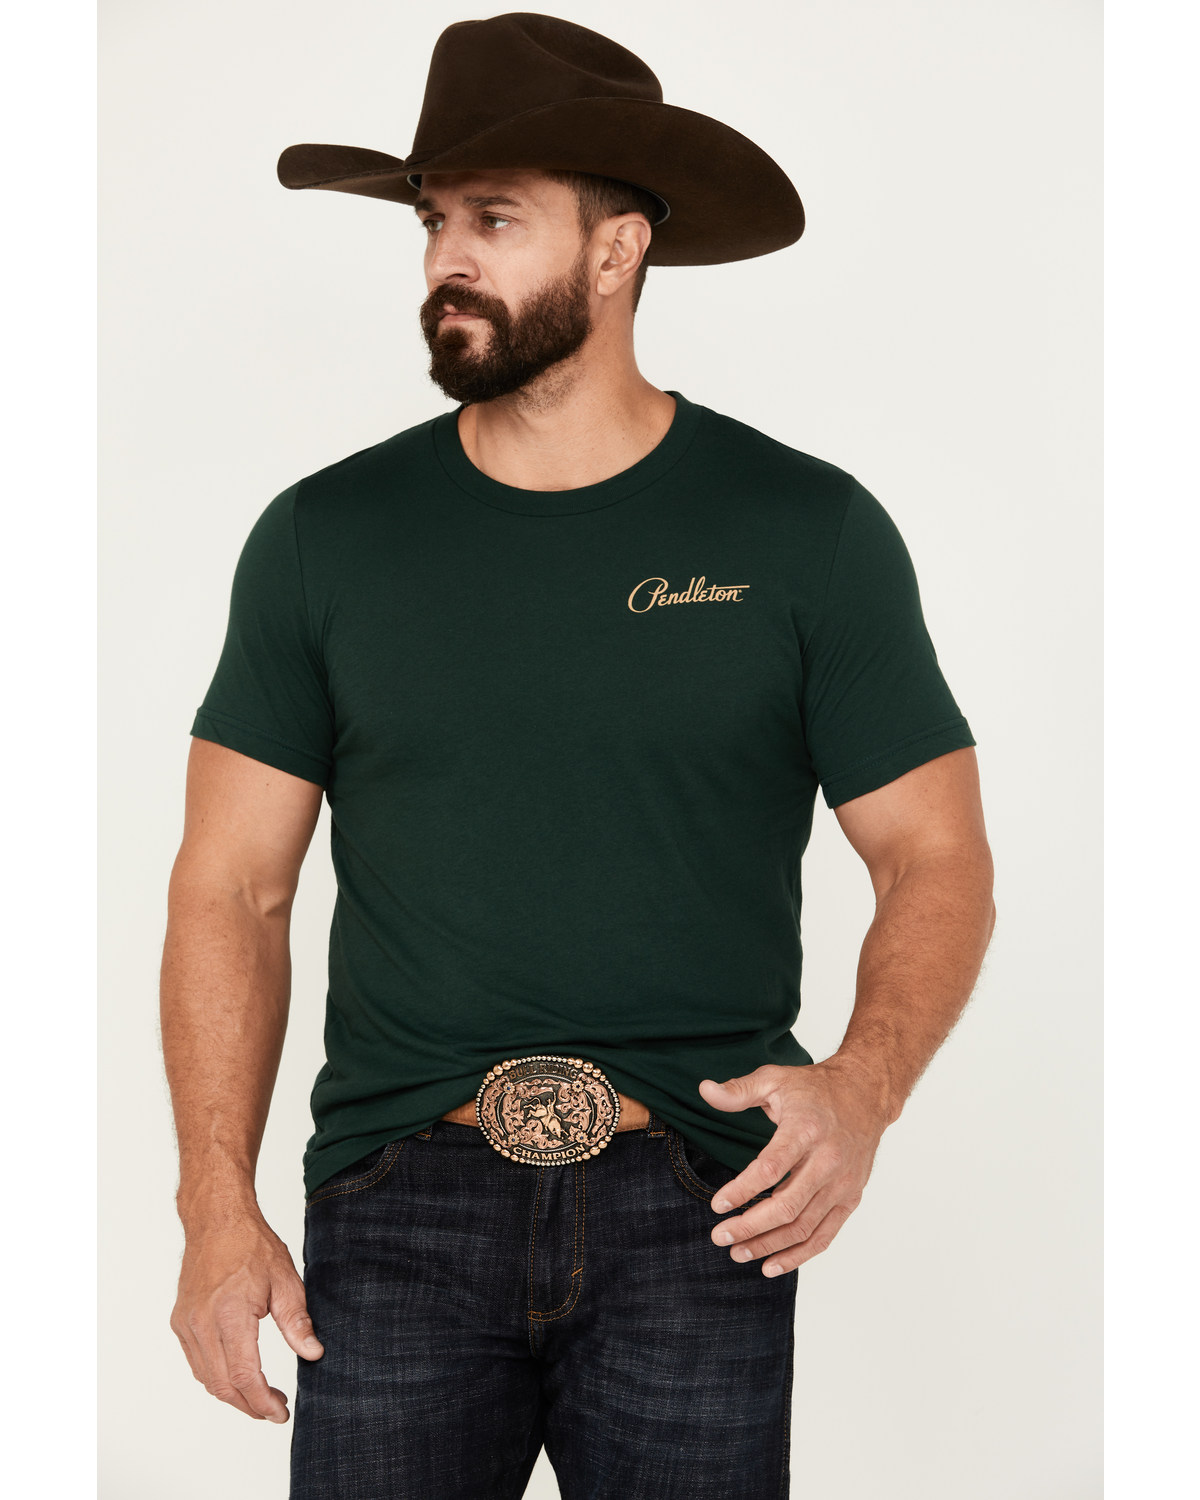 Pendleton Men's Tye River Buffalo Short Sleeve T-Shirt